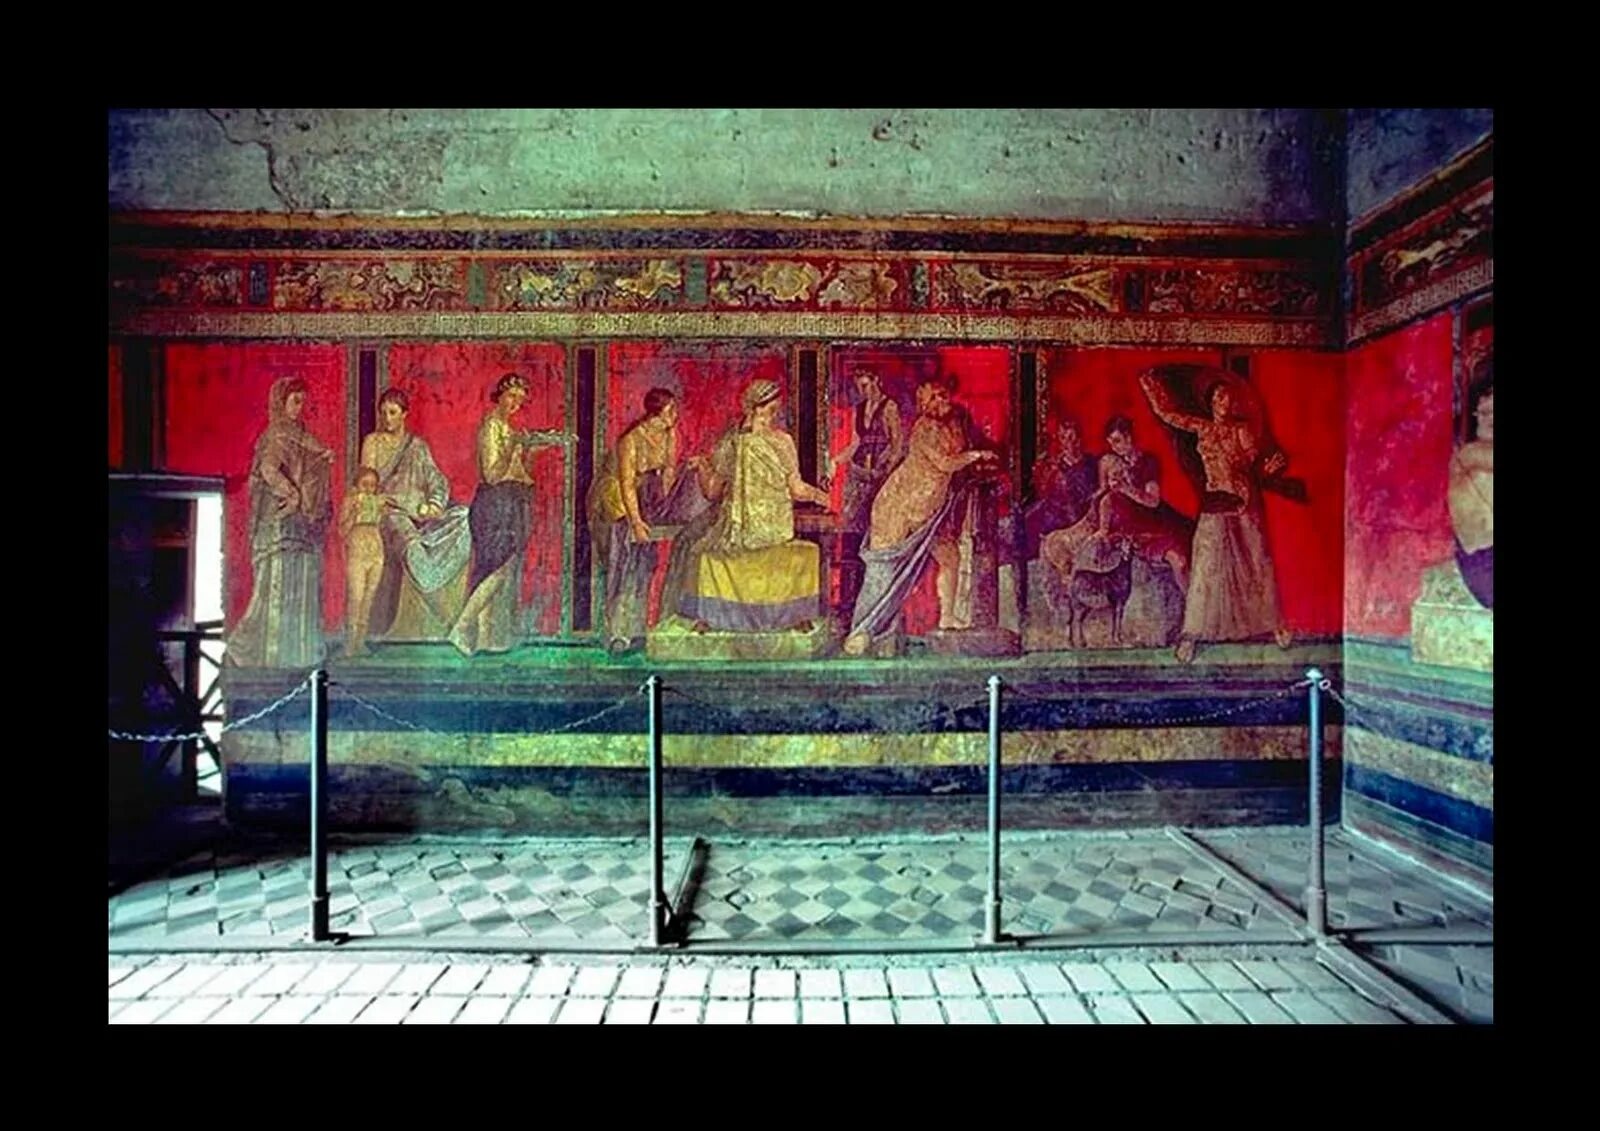 Ванная комната древнего римлянина. Фрески виллы мистерий в Помпеях. Вилла мистерий в Помпеях. Древний Рим вилла мистерий. Помпейская вилла мистерий.